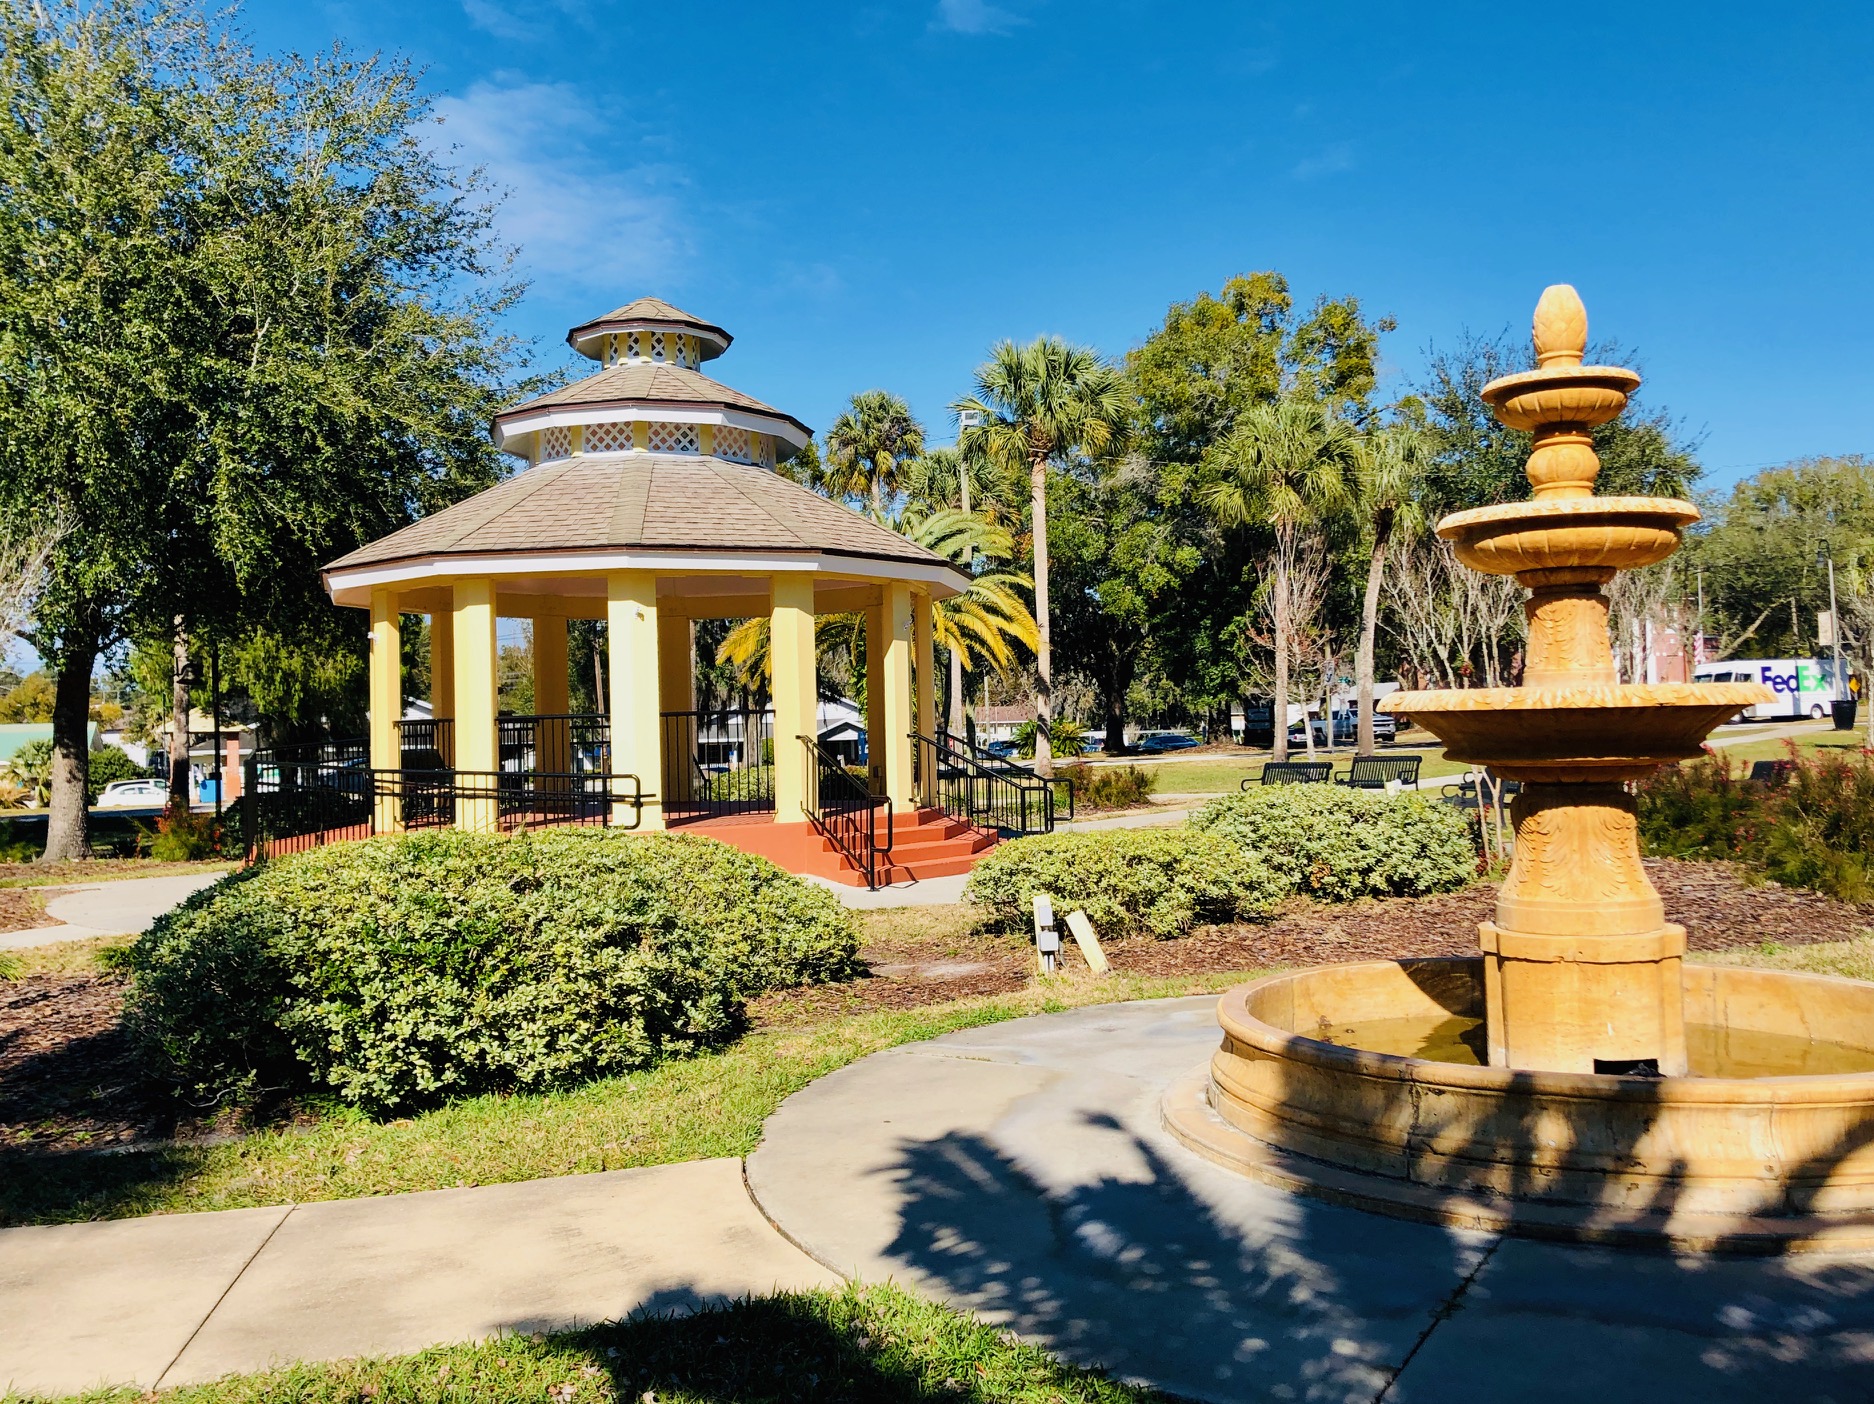 Dickinson Park Fountain and Gazebo